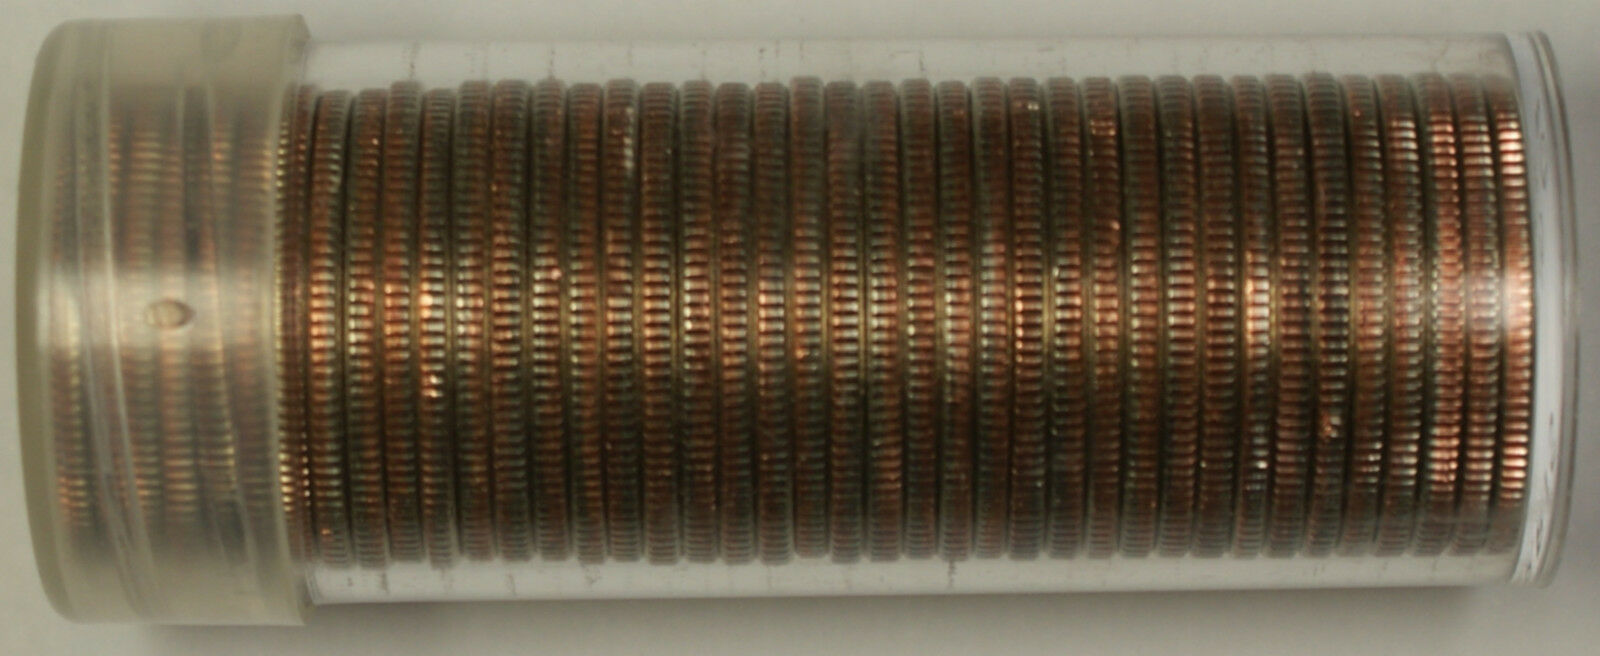 2003 P Illinois State Quarter BU Roll- 40 Coins